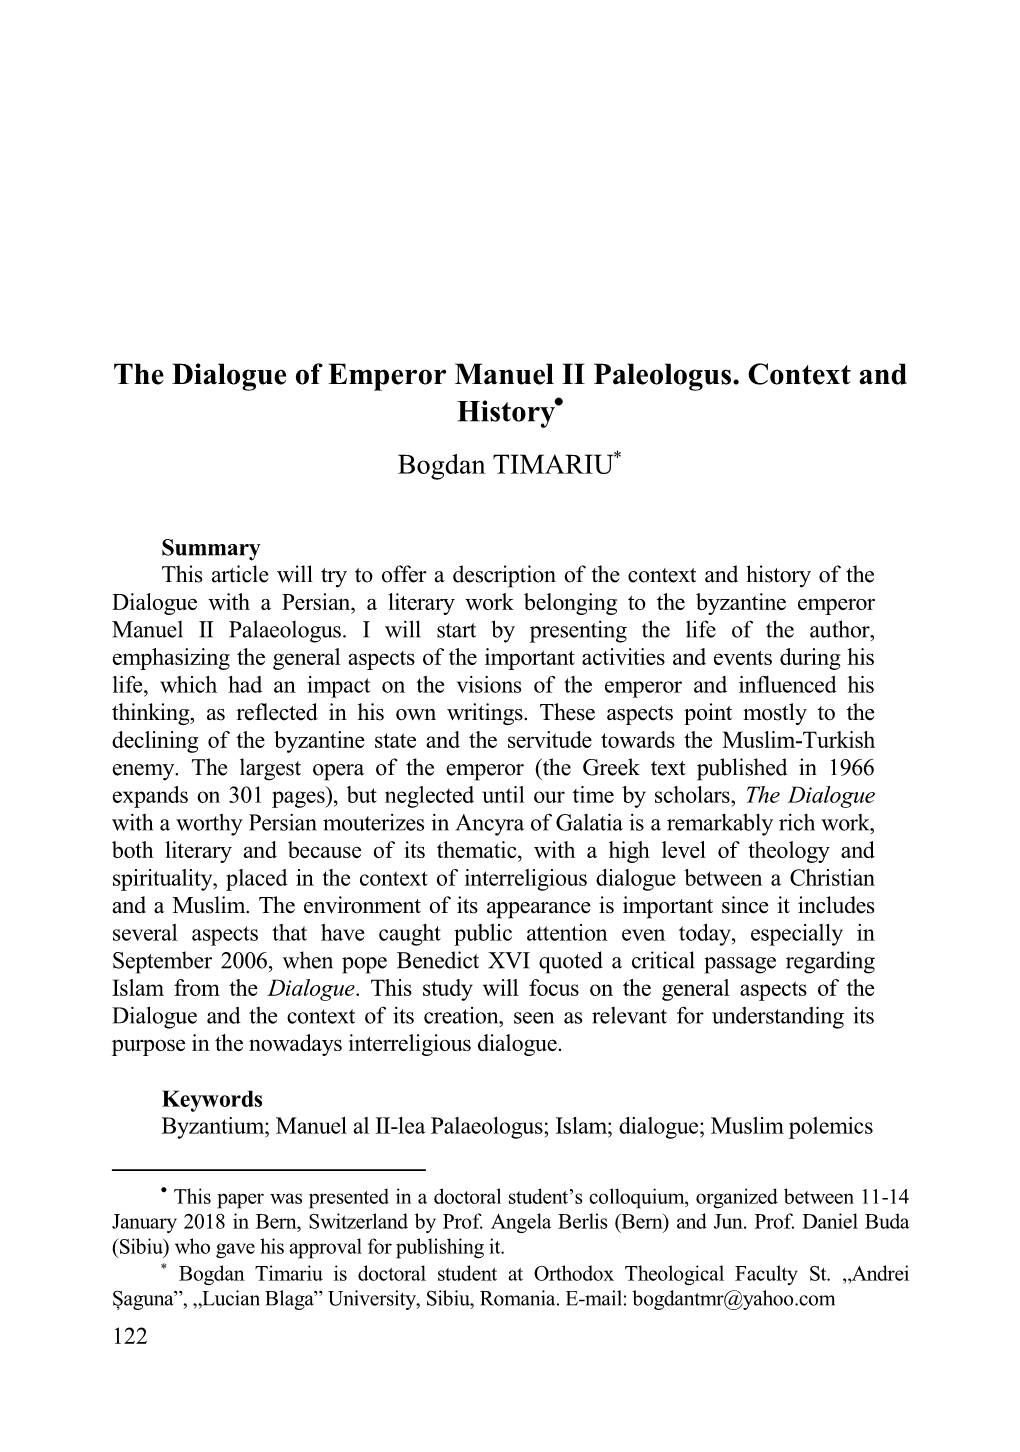 The Dialogue of Emperor Manuel II Paleologus. Context and History Bogdan TIMARIU